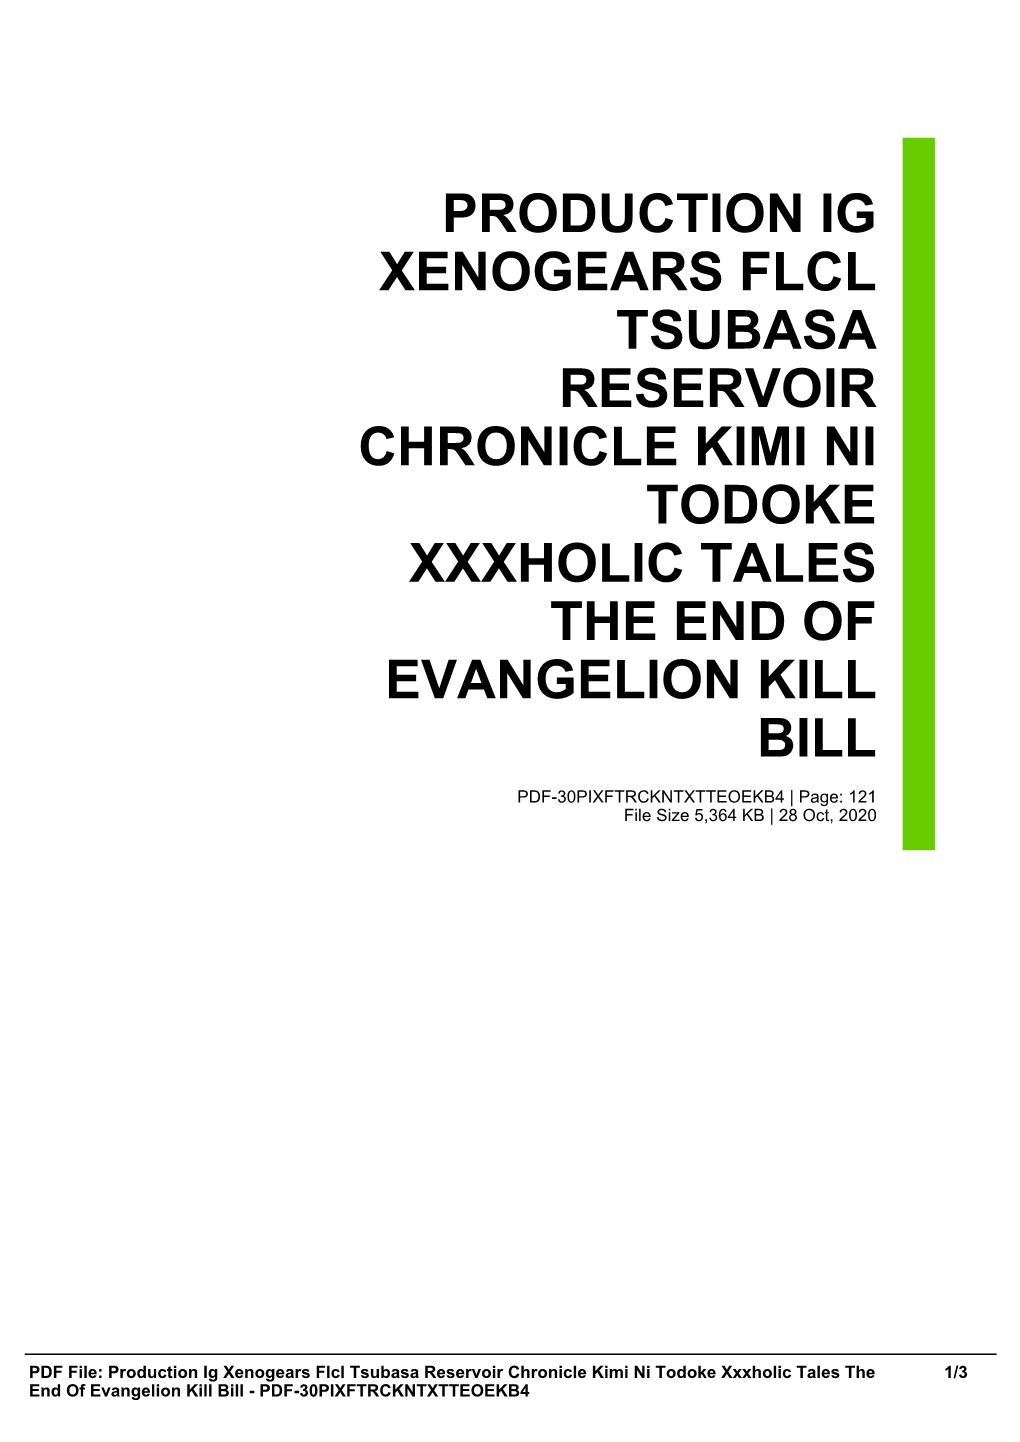 Production Ig Xenogears Flcl Tsubasa Reservoir Chronicle Kimi Ni Todoke Xxxholic Tales the End of Evangelion Kill Bill